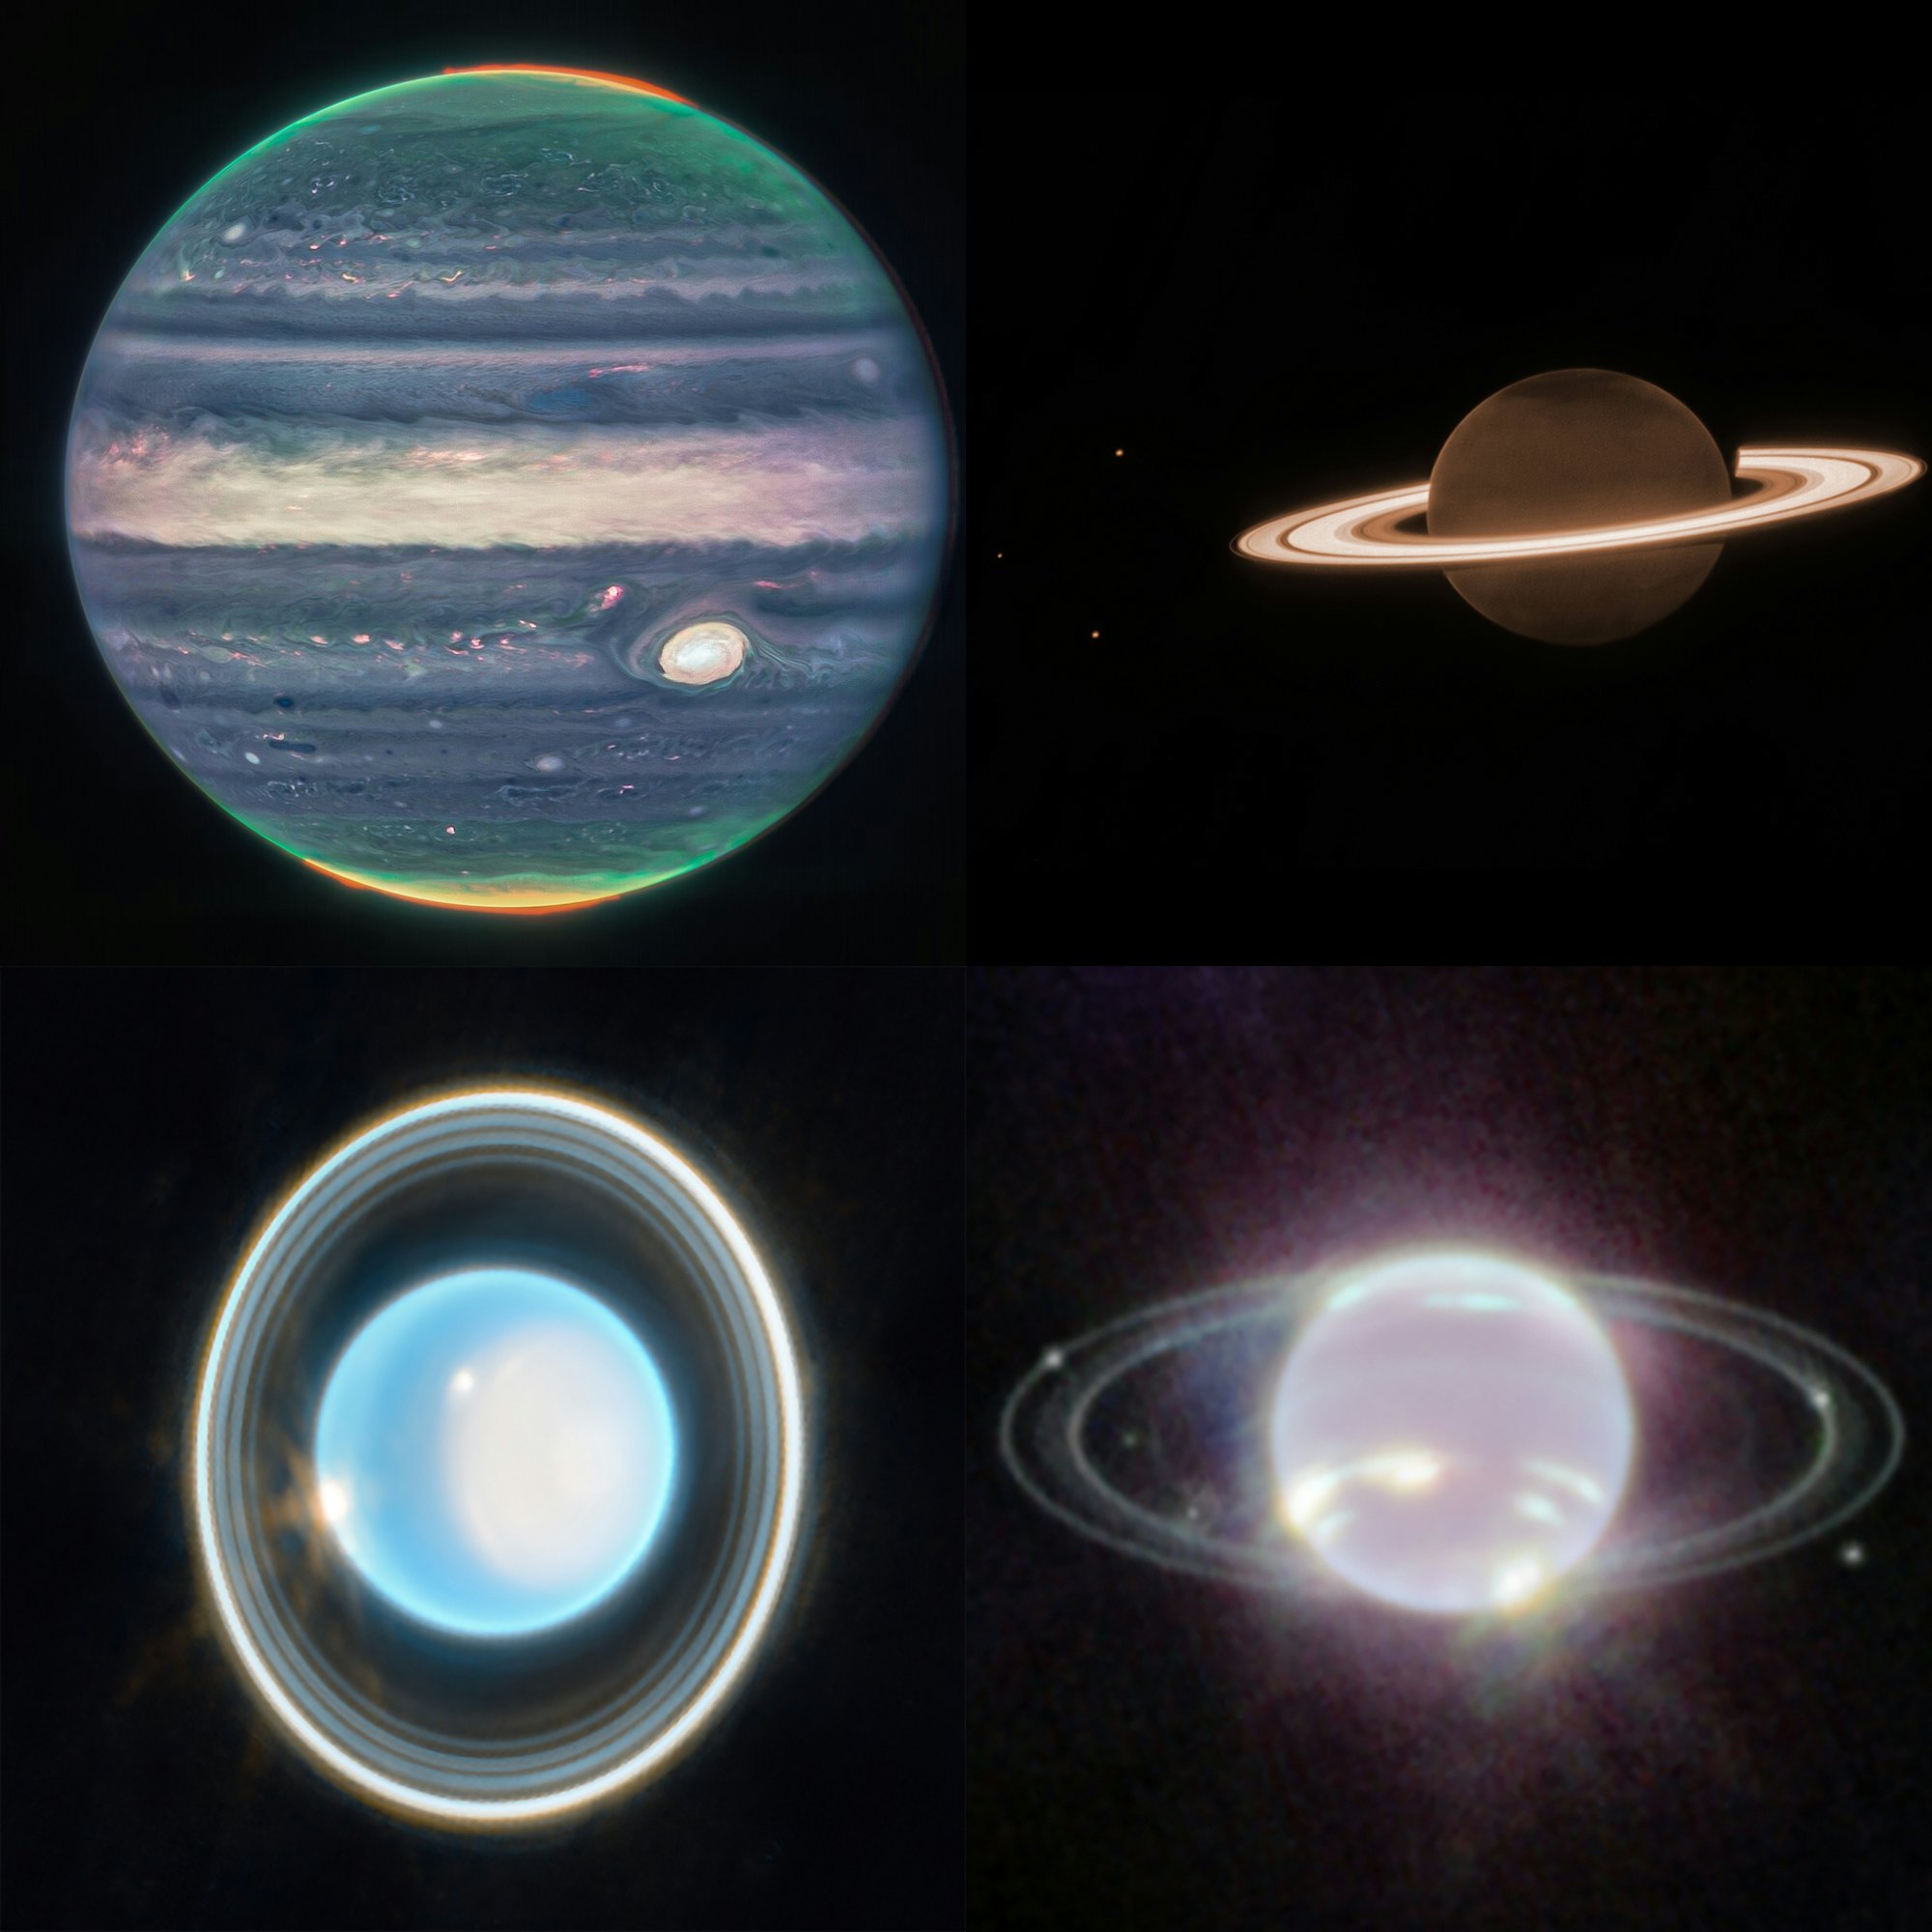 rings of saturn through telescope